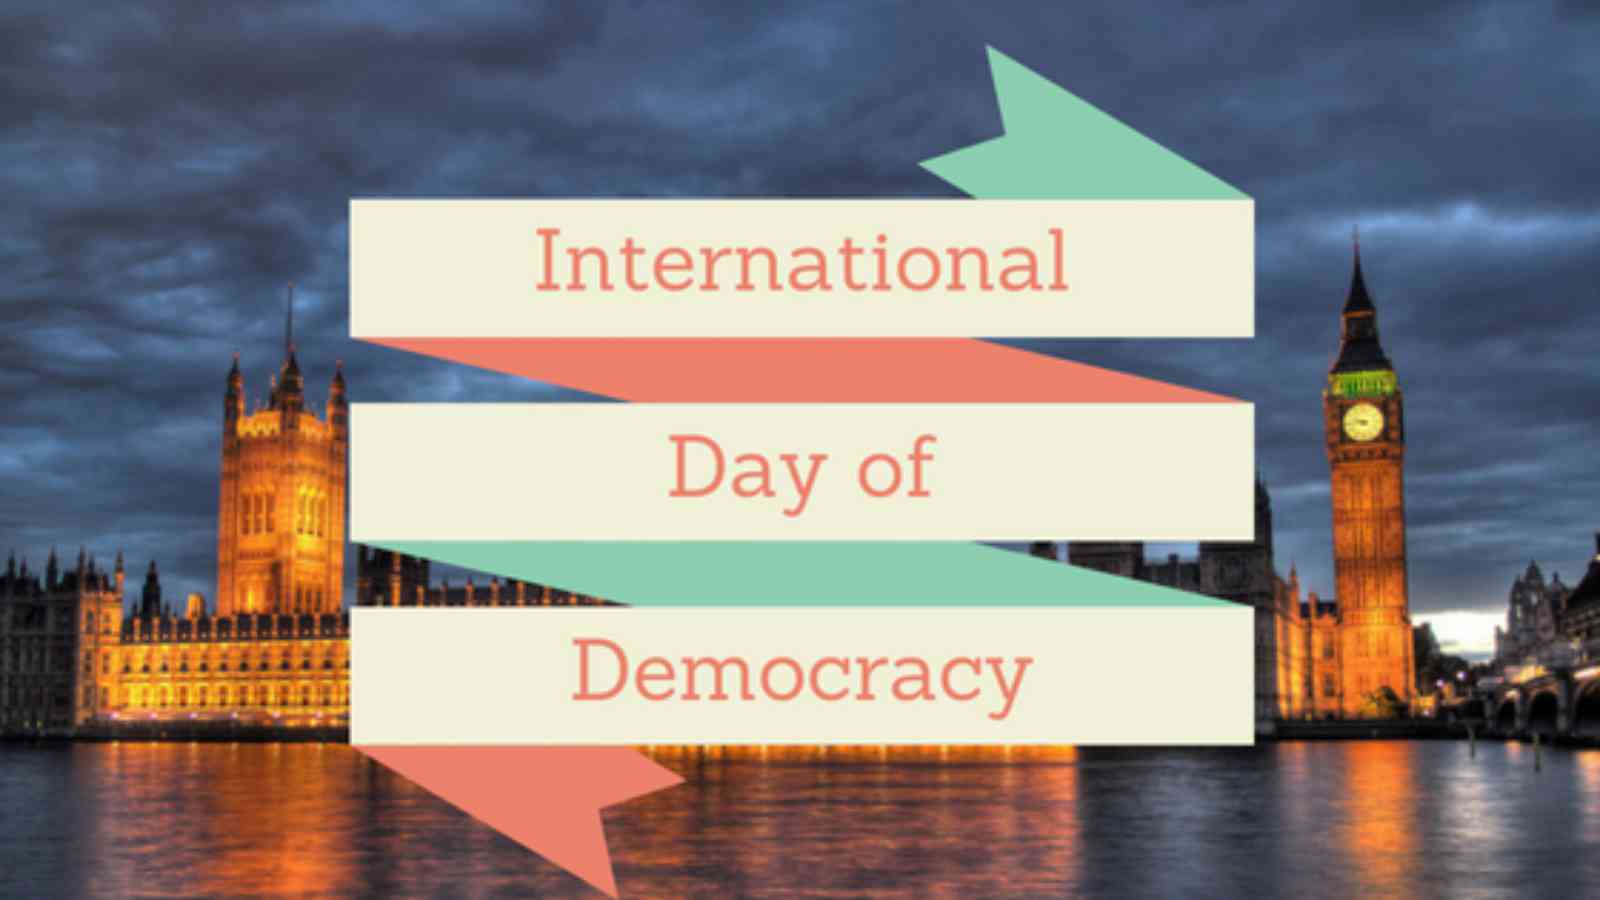 International Day of Democracy 2022: Date, History and Origin